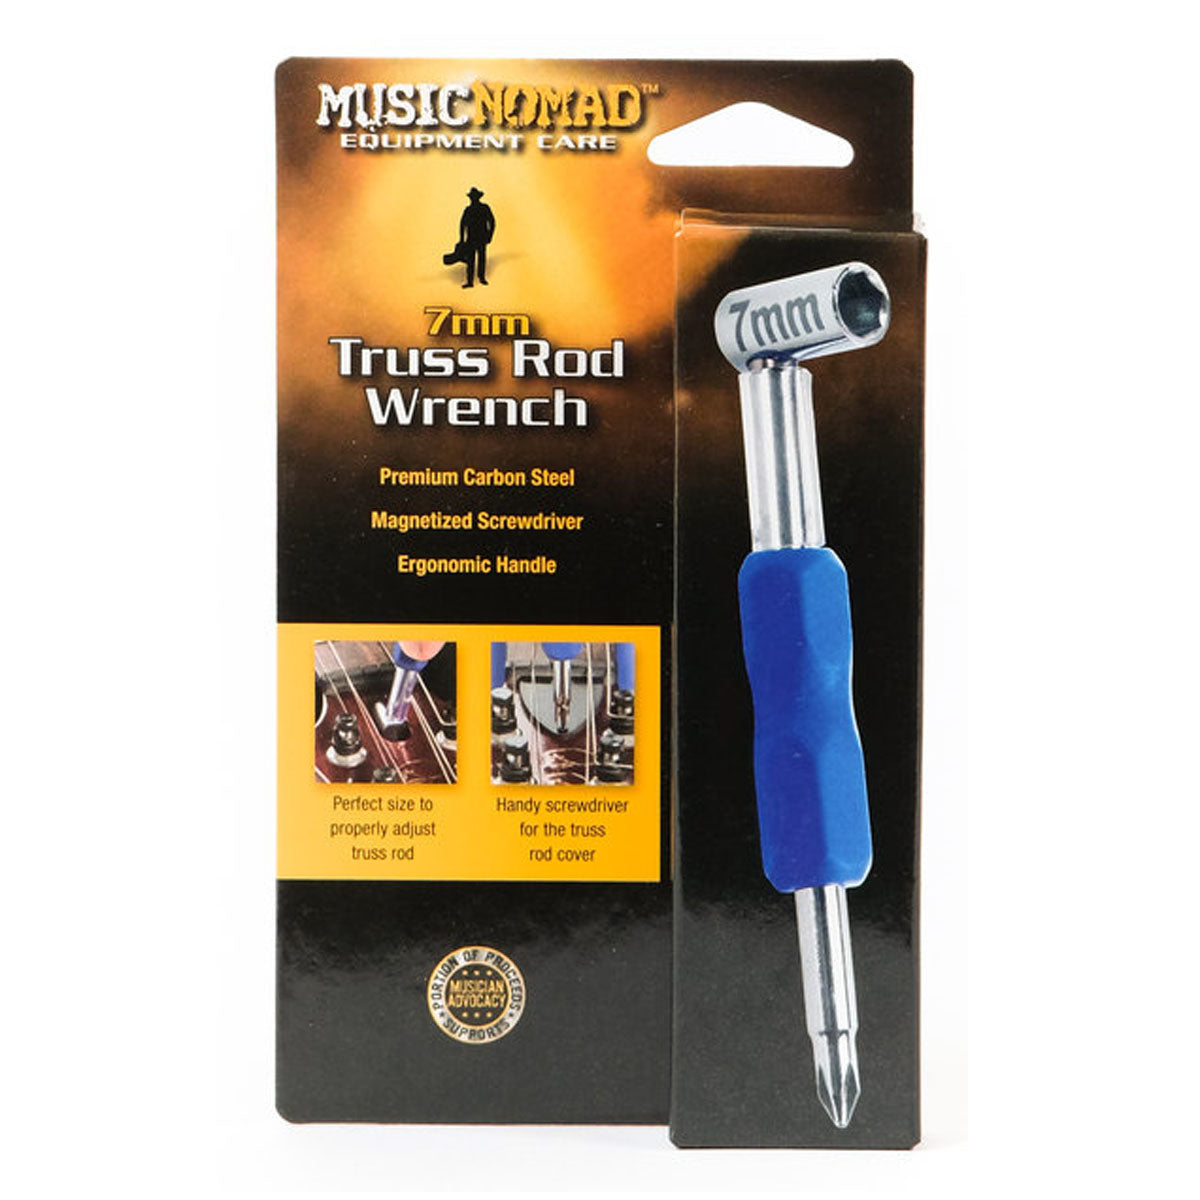 Music Nomad MN233 Premium Truss Rod Wrench - 7mm